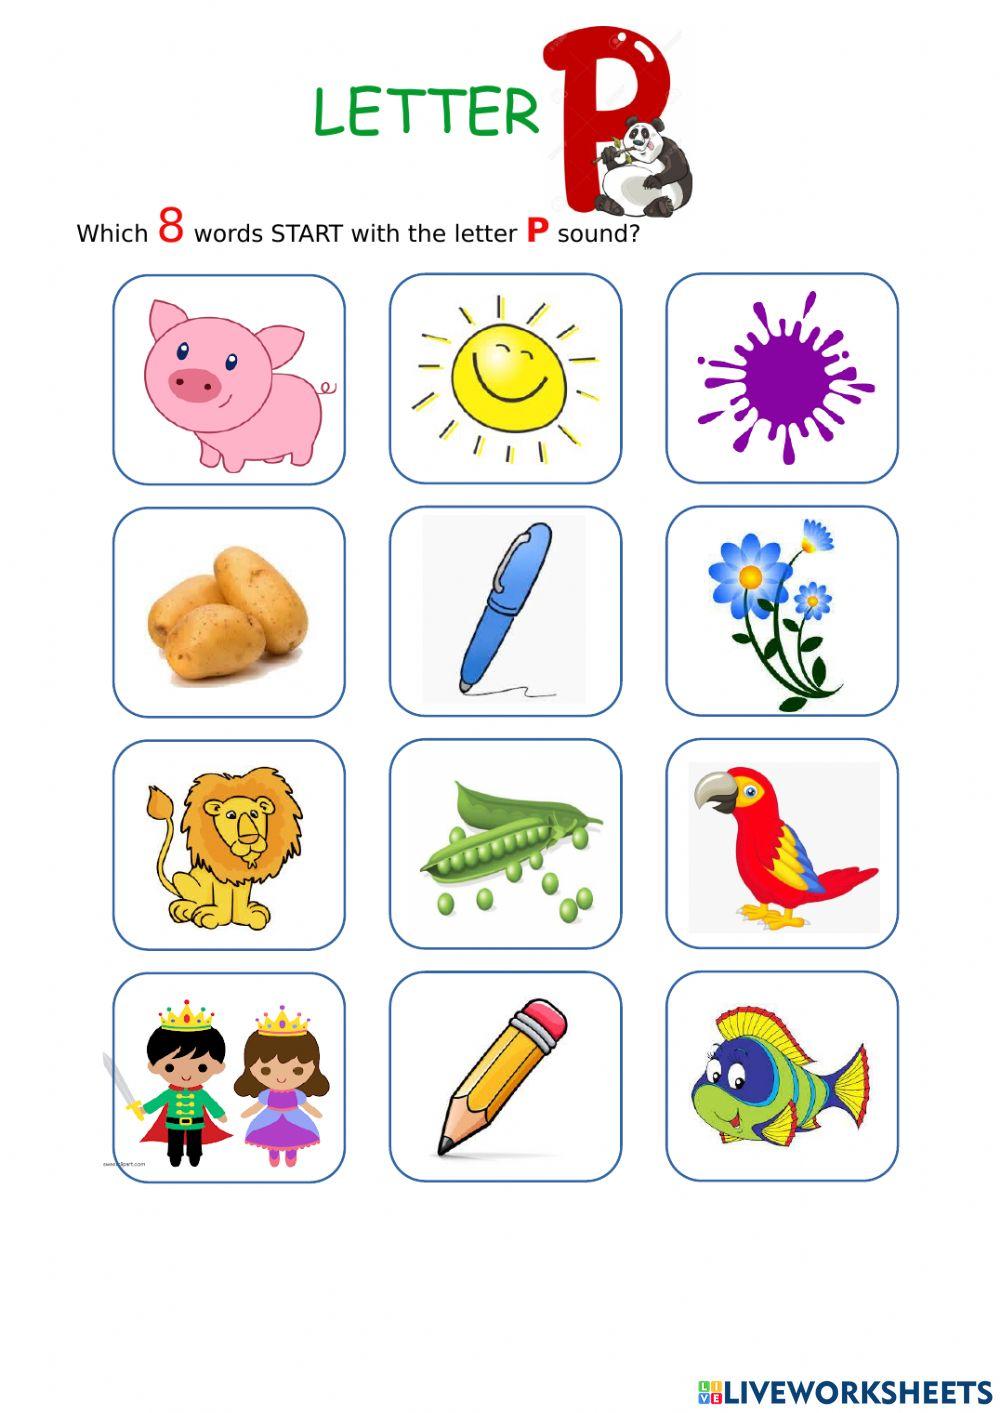 Letter P online pdf activity for Primary school | Live Worksheets